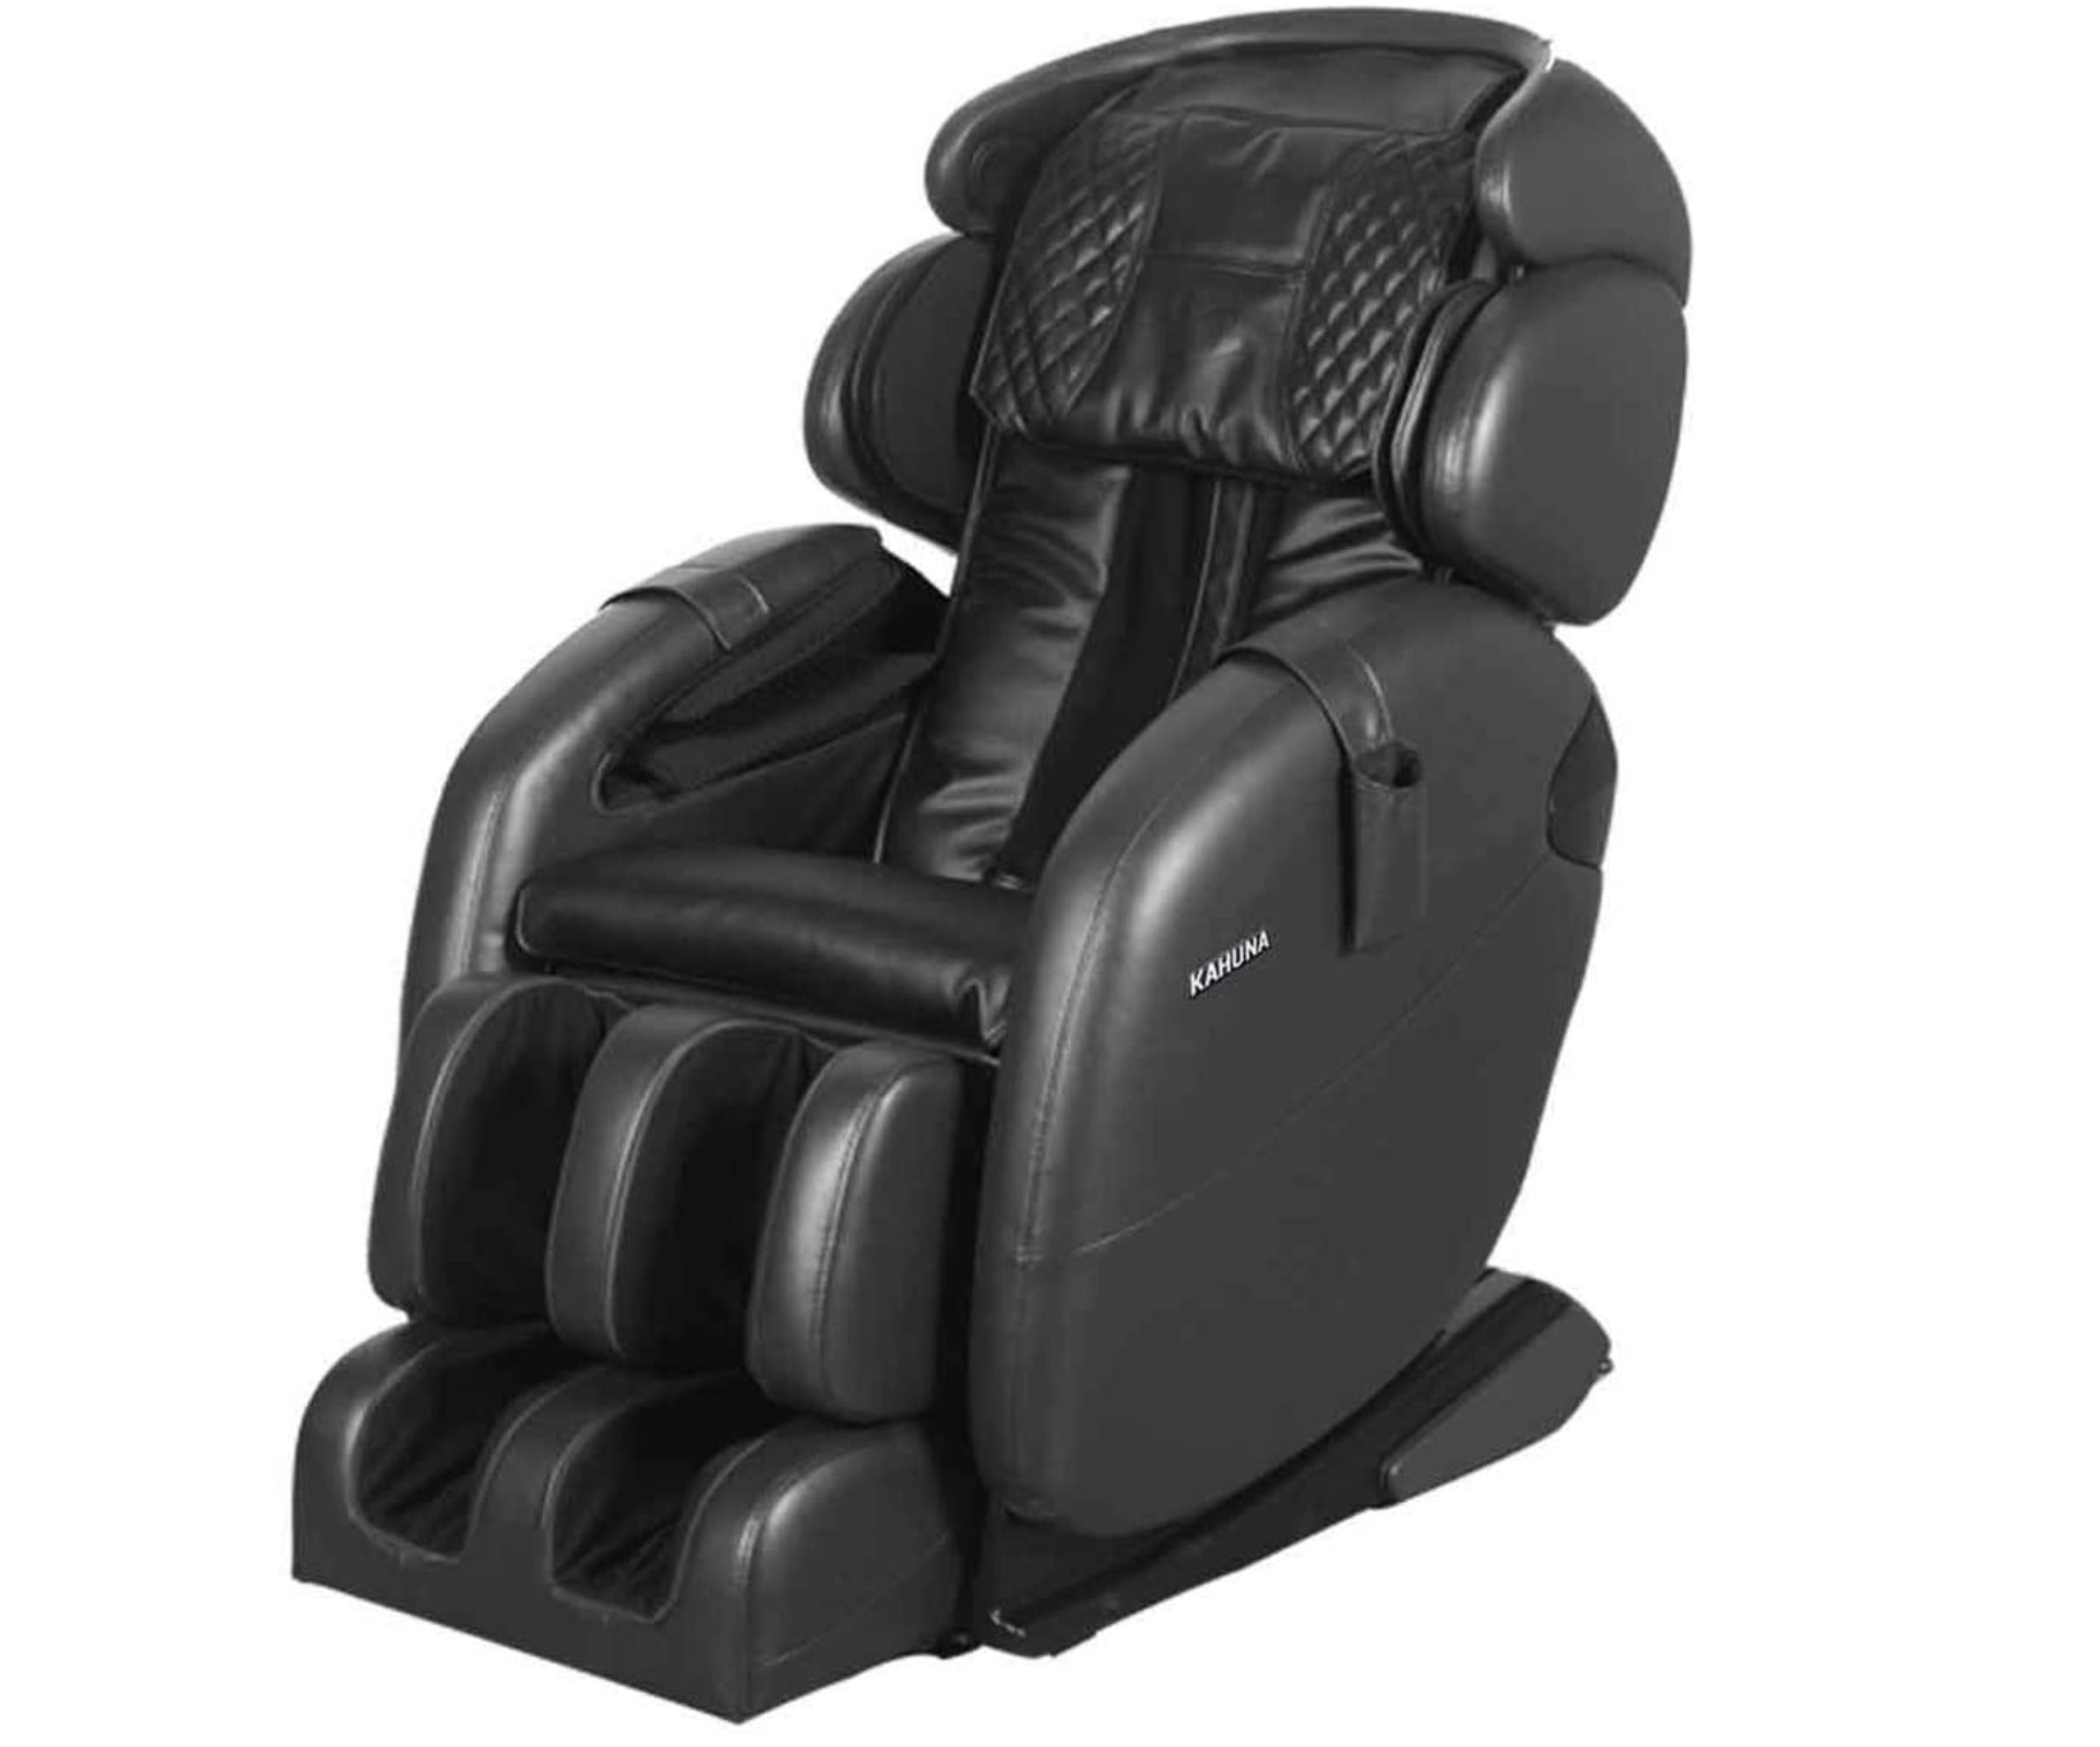 Kahuna massage chair review